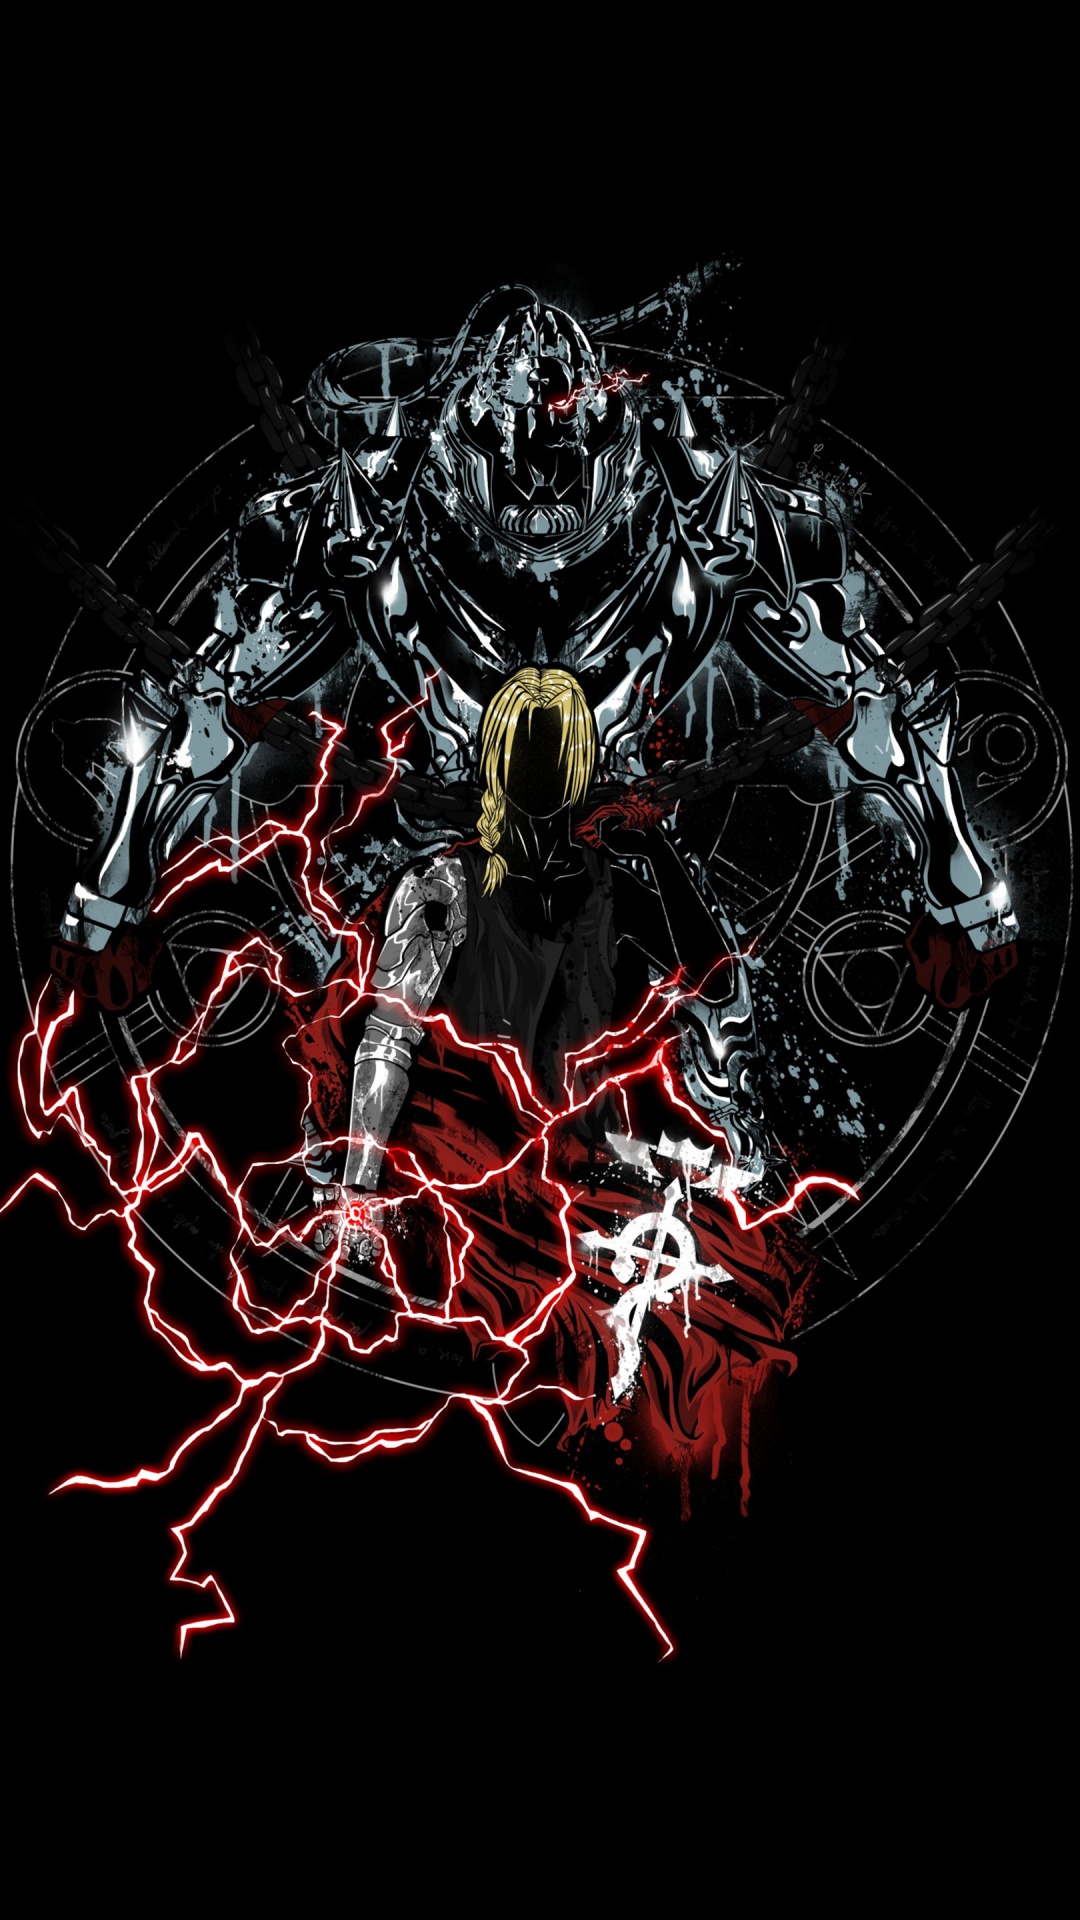 Full Metal Alchemist Brotherhood Wallpaper - Image Abyss